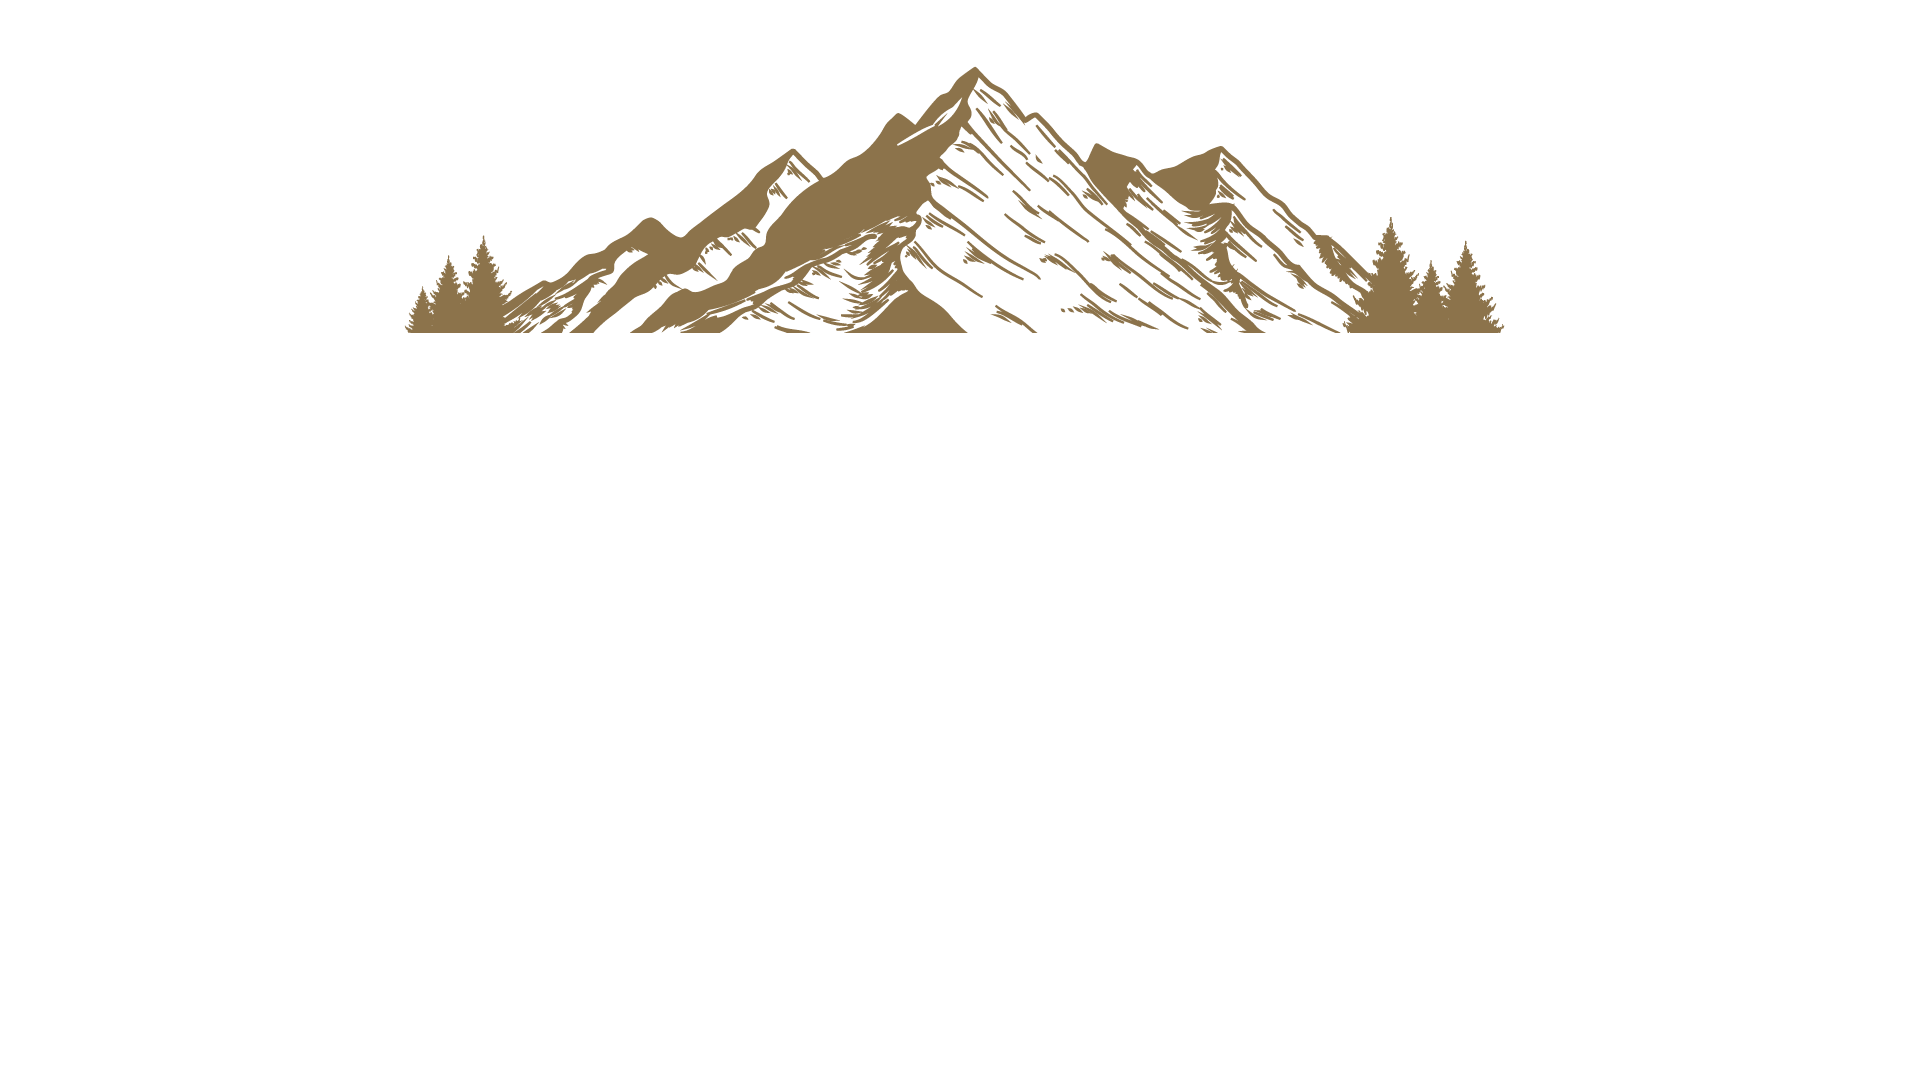 State 38 Distilling